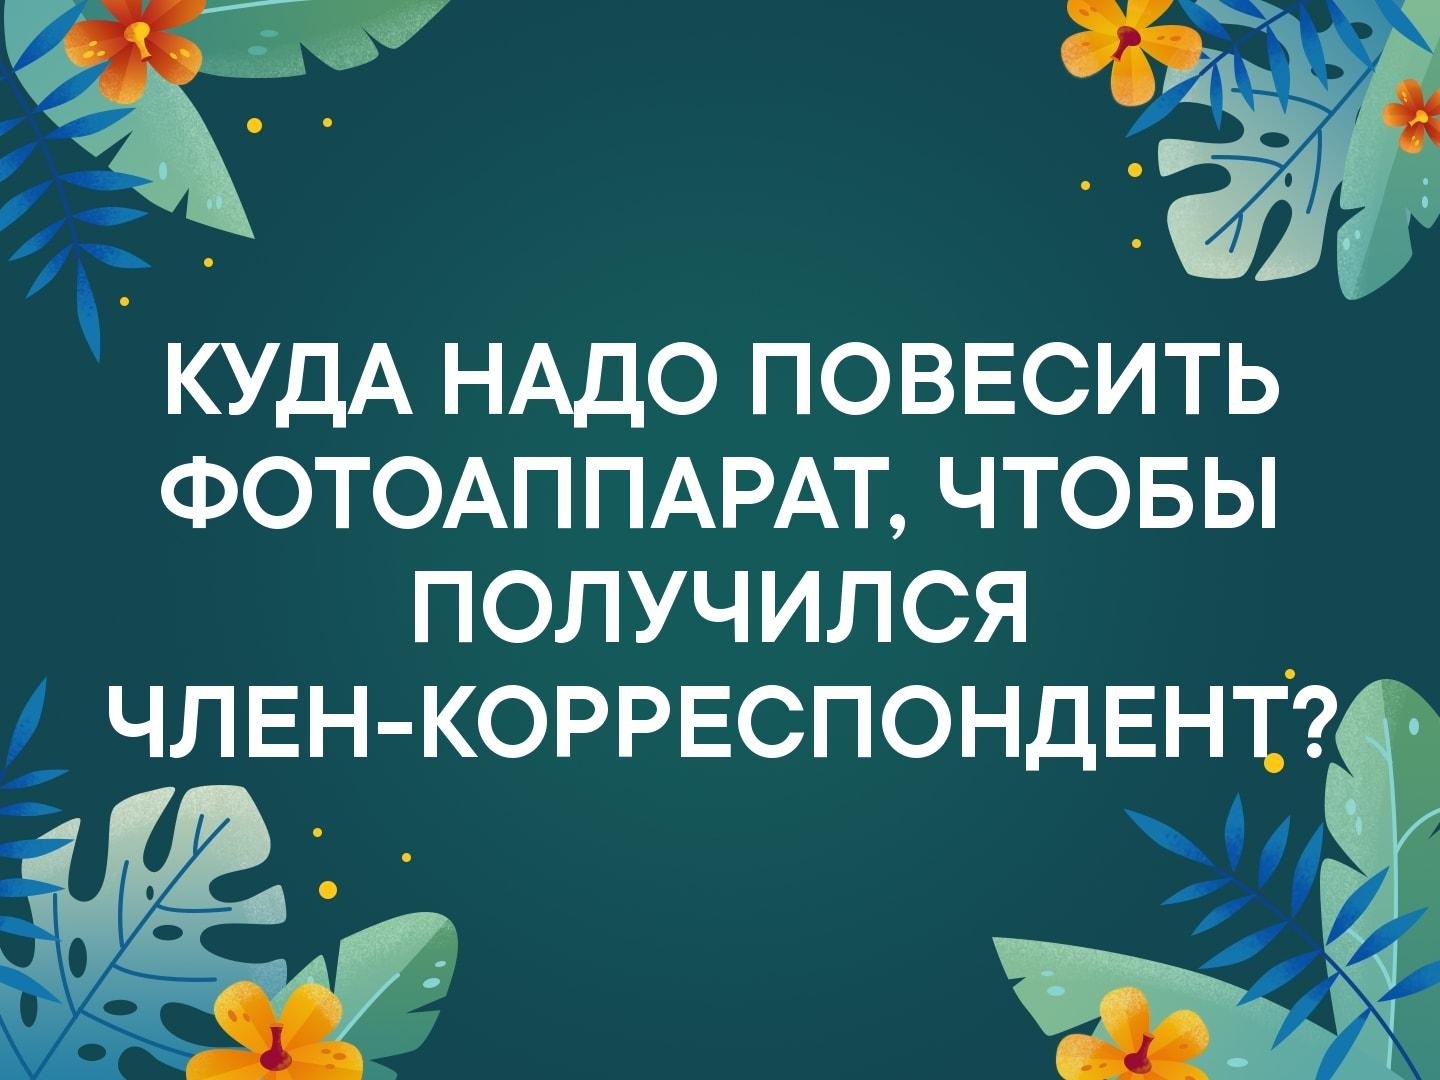 Vlad Anfin - 23  2019  03:54